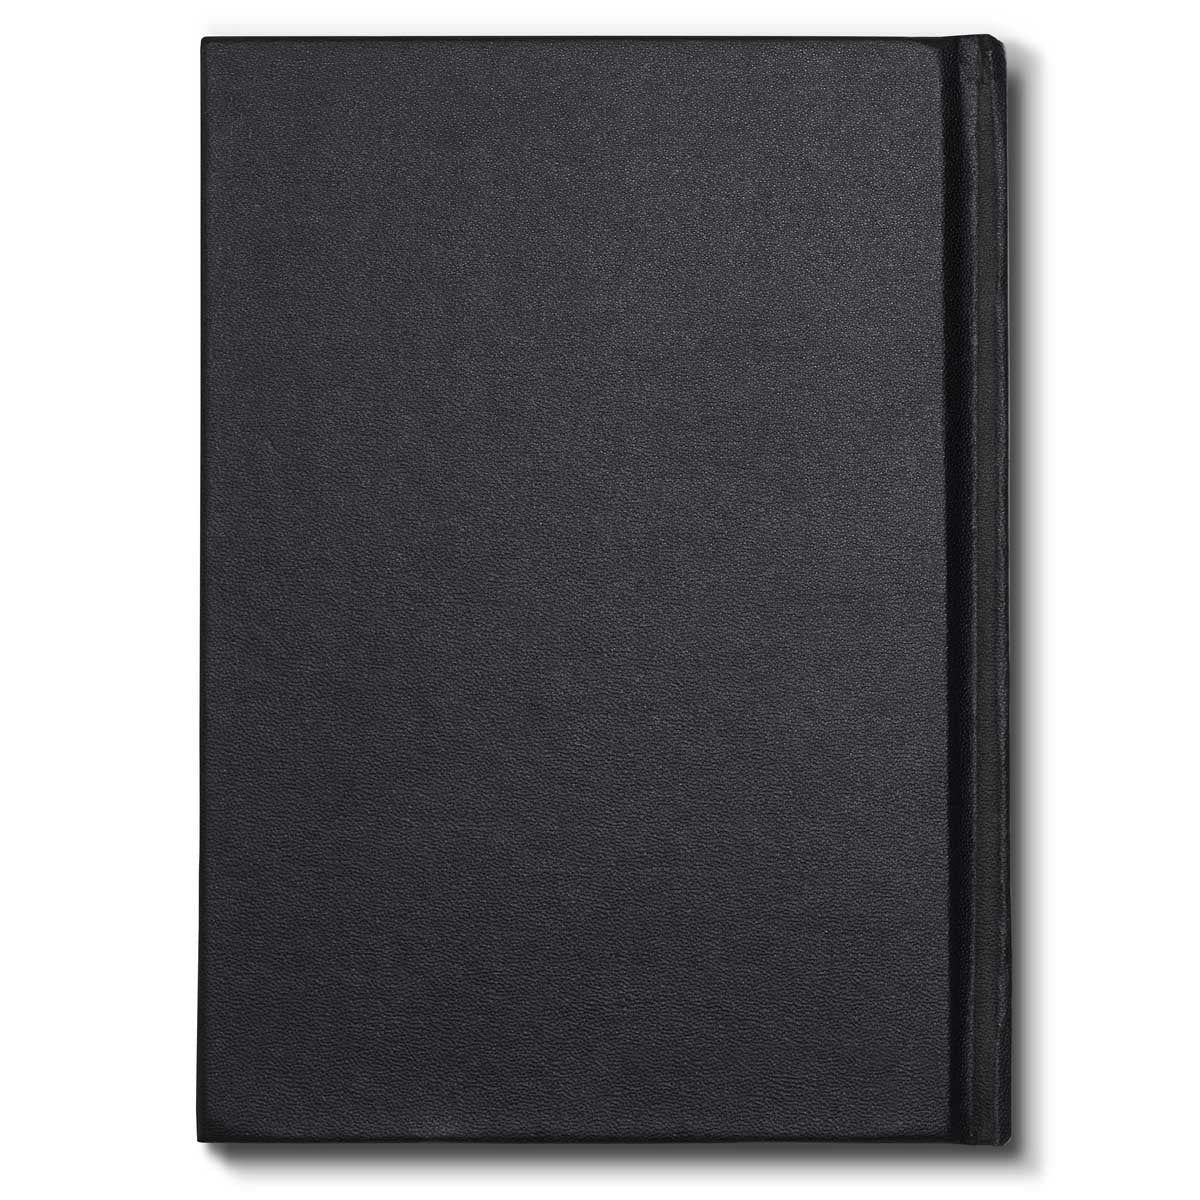 Winsor and Newton - Hardback Bound Sketchbook 110g A5